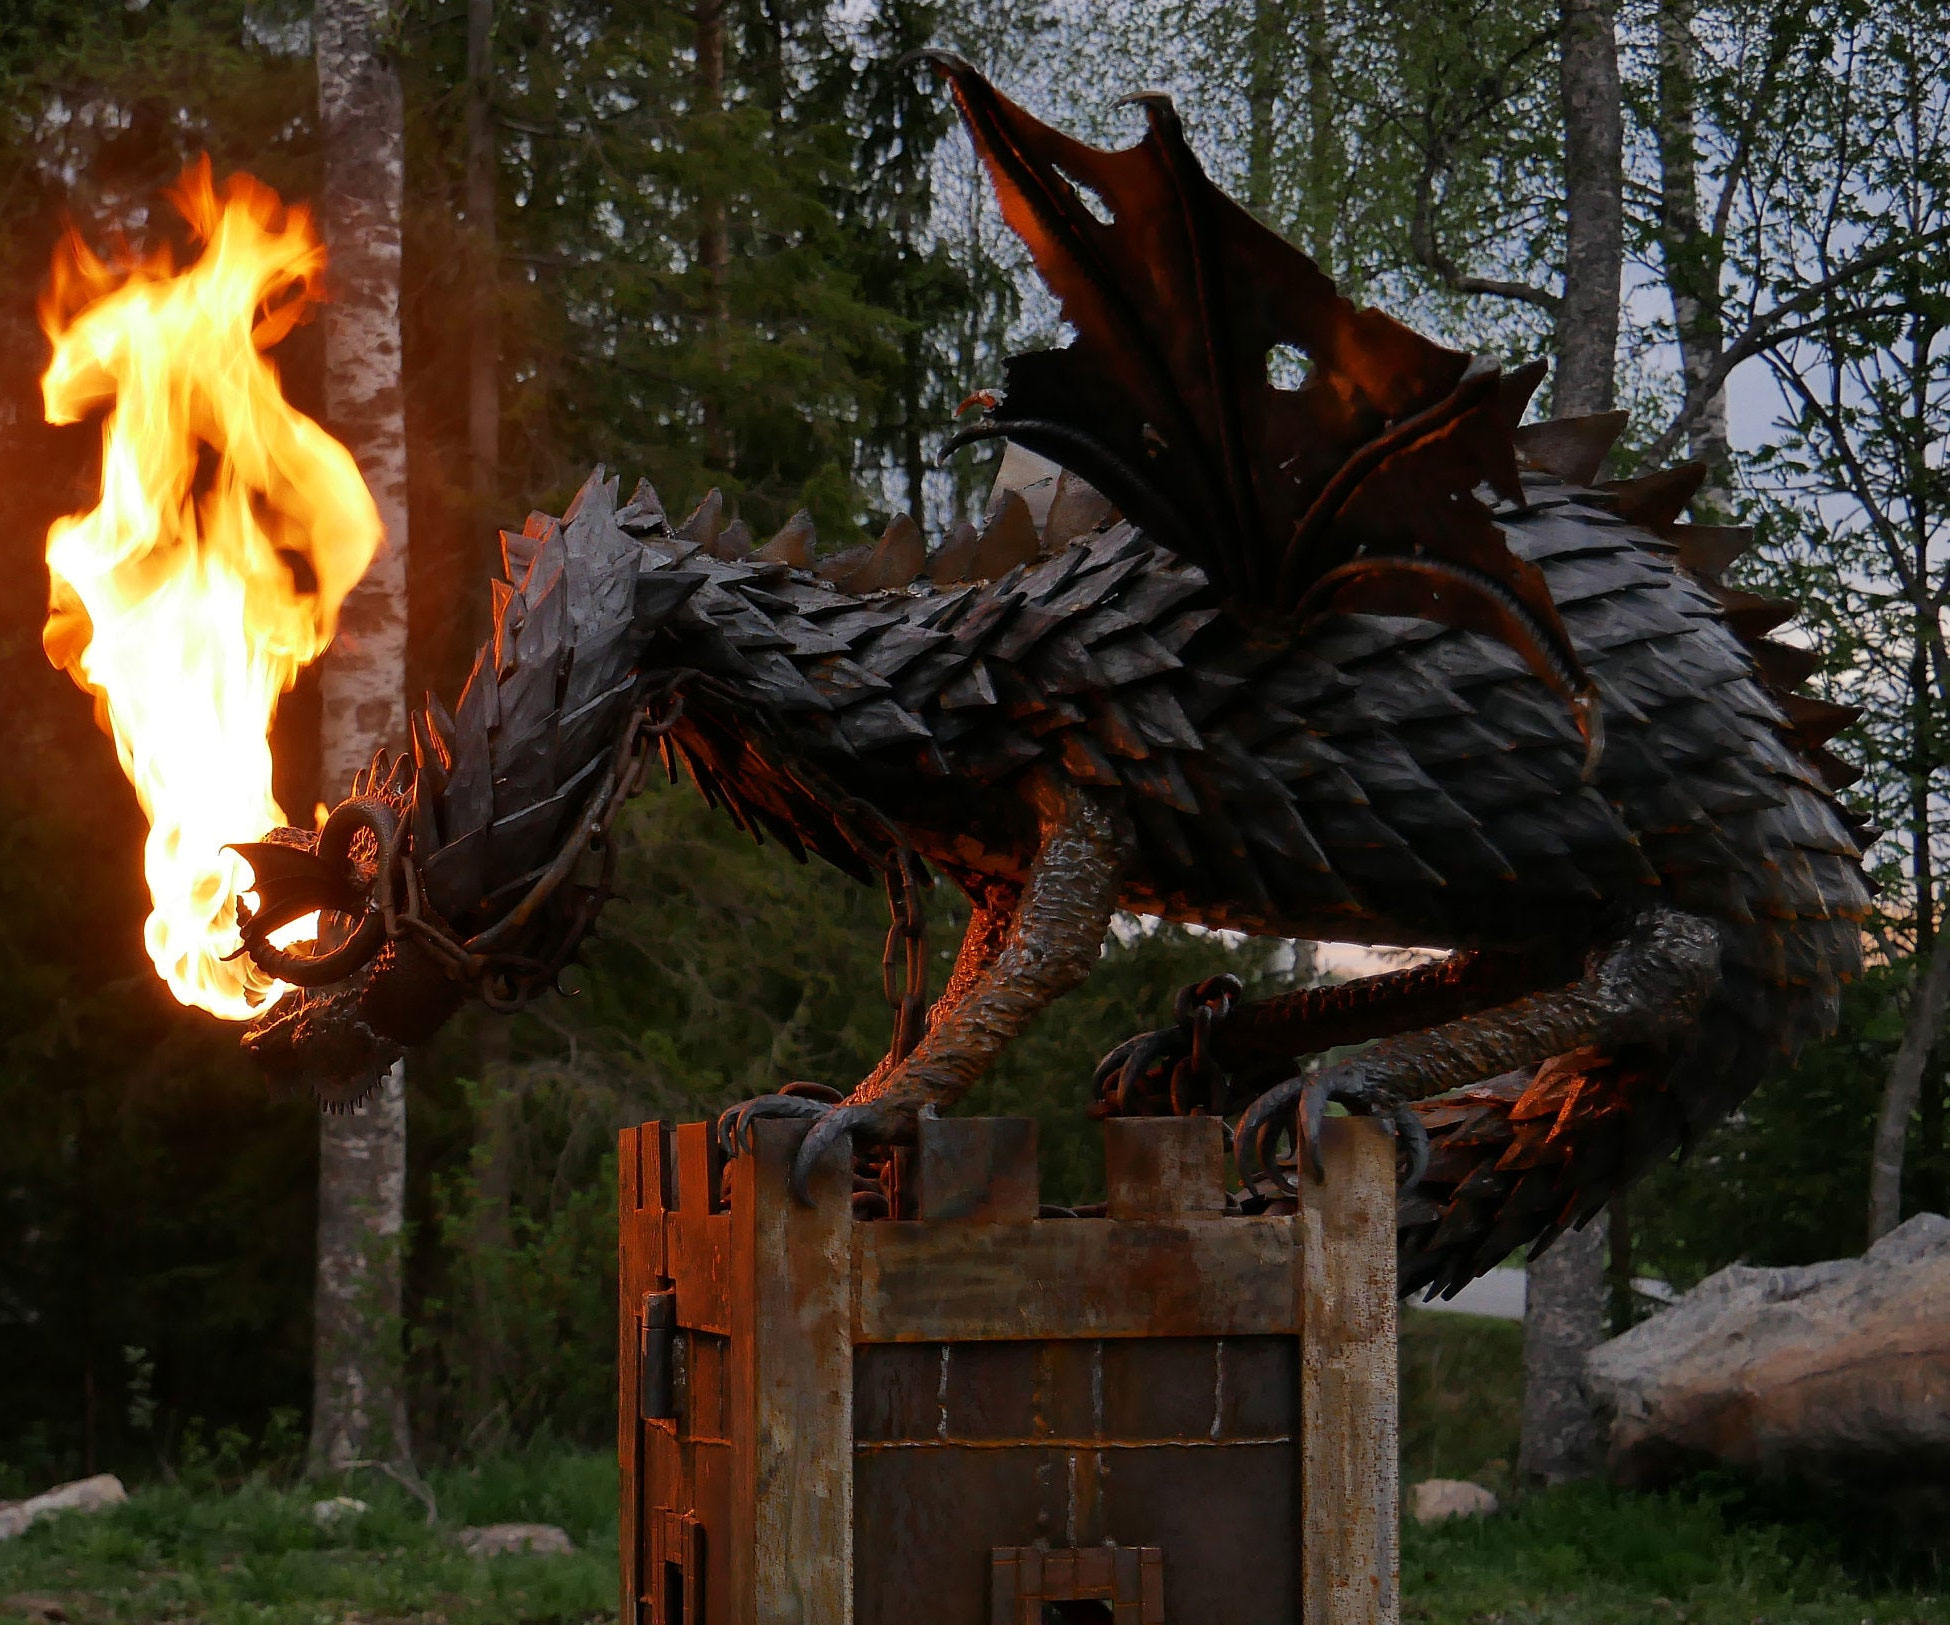 Fire Breathing Dragon Sculpture 2